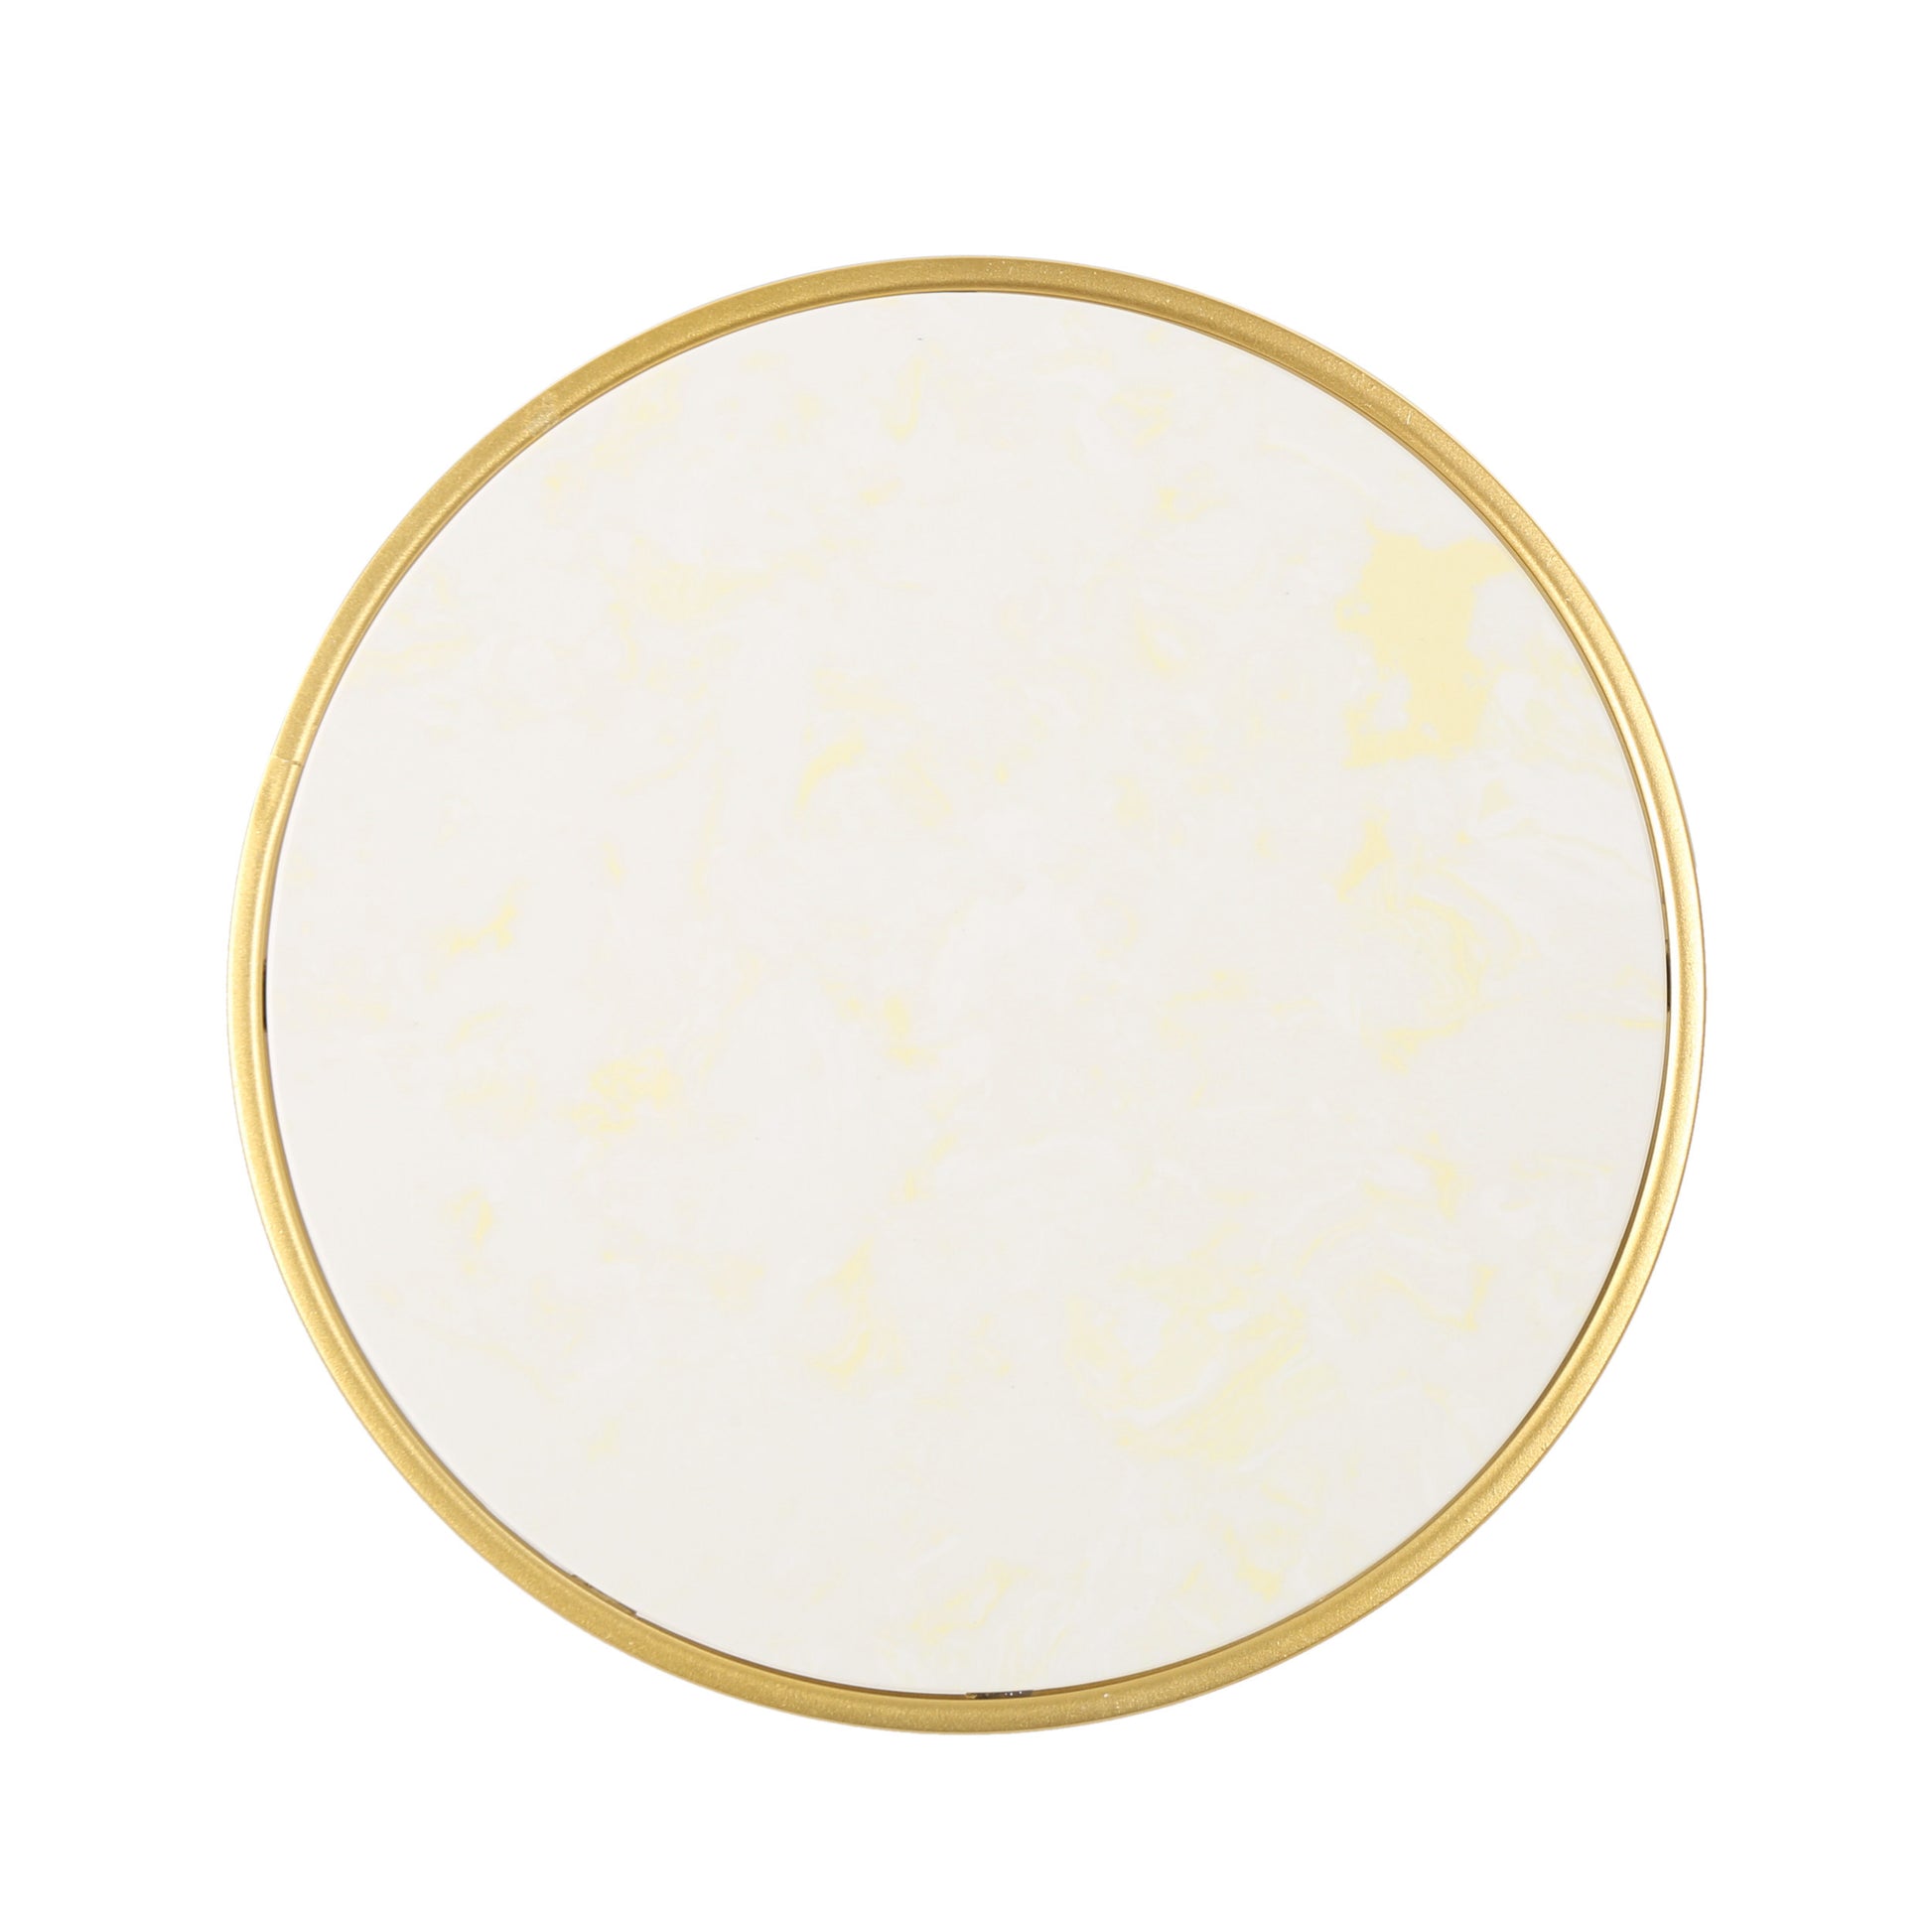 Drexel 16" Side Table - White Gold Metal Stone